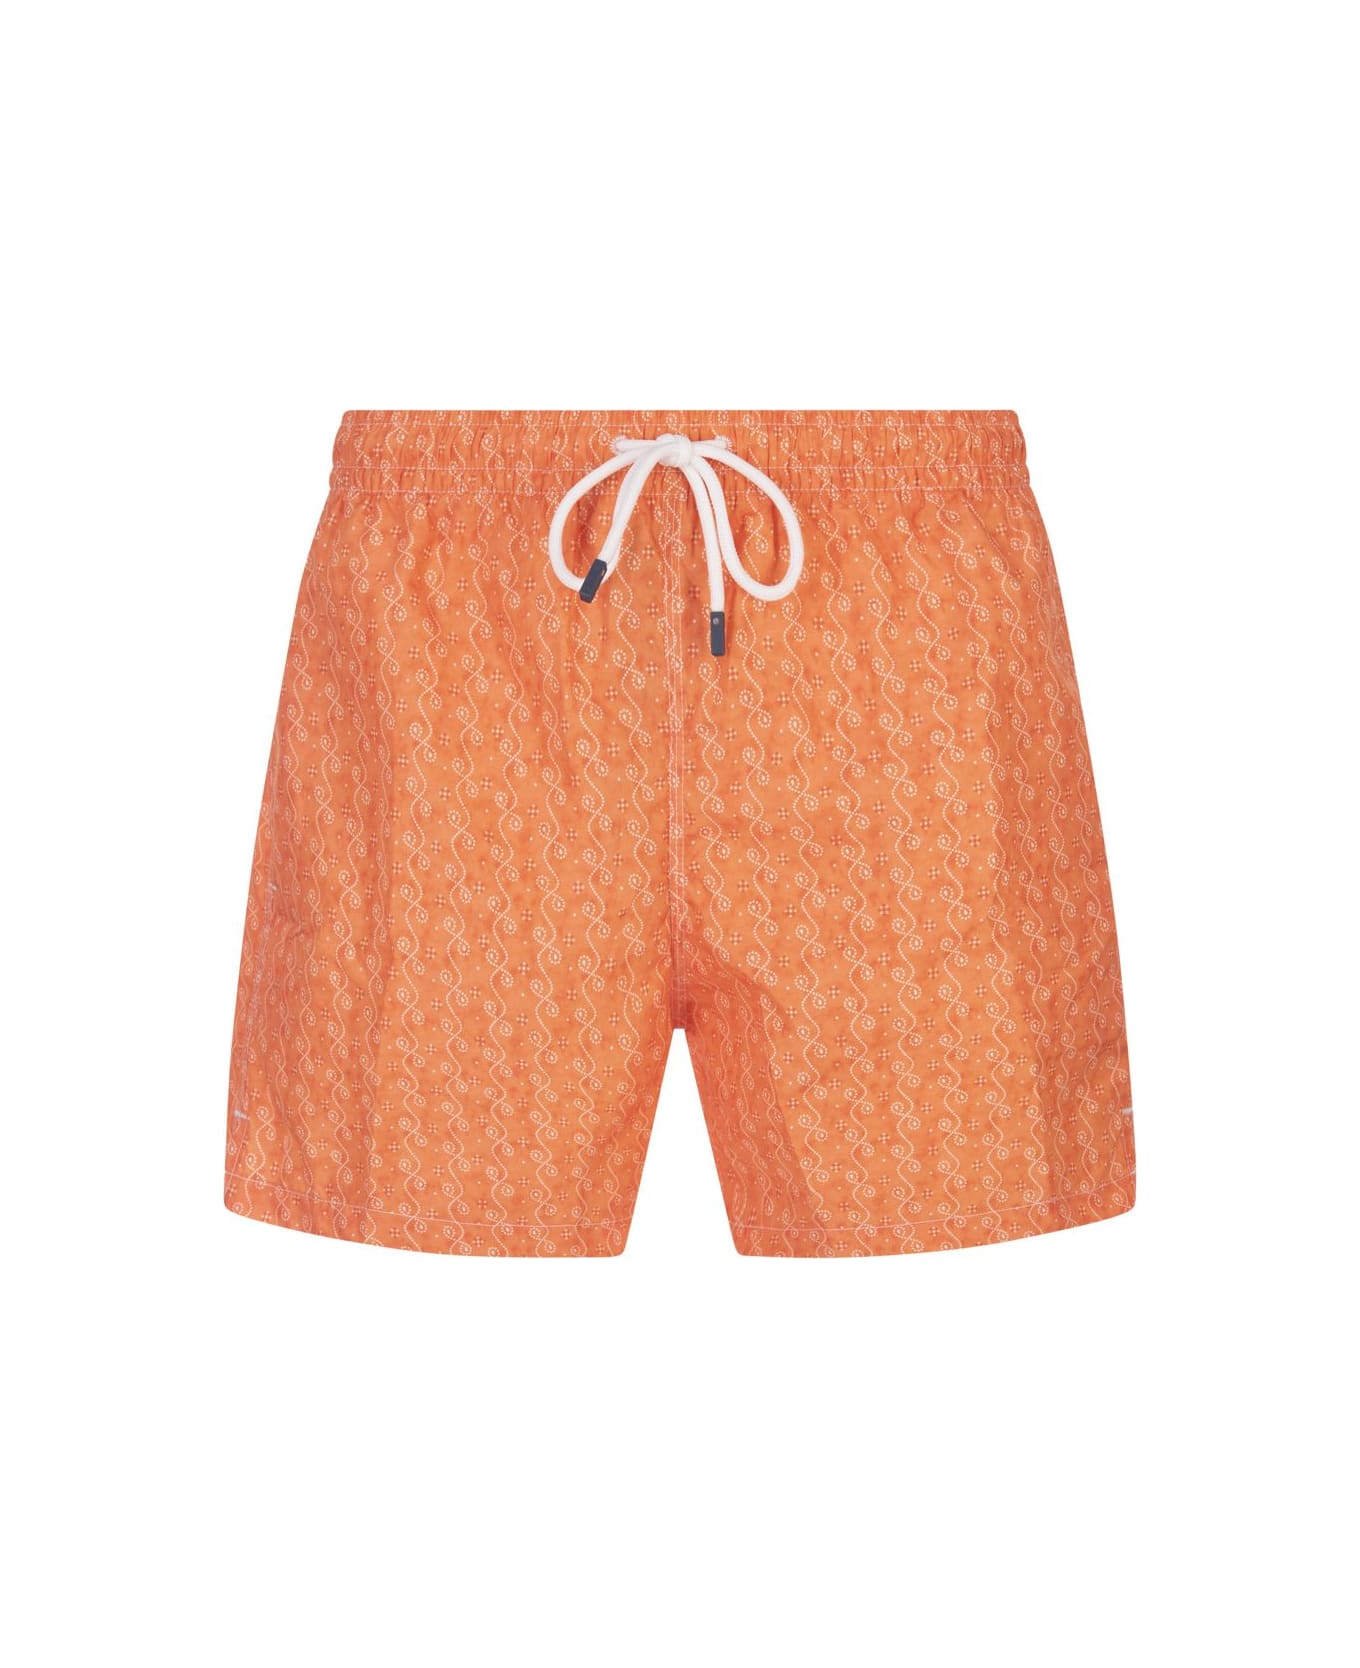 Fedeli Orange Swim Shorts With Micro Pattern - Orange スイムトランクス